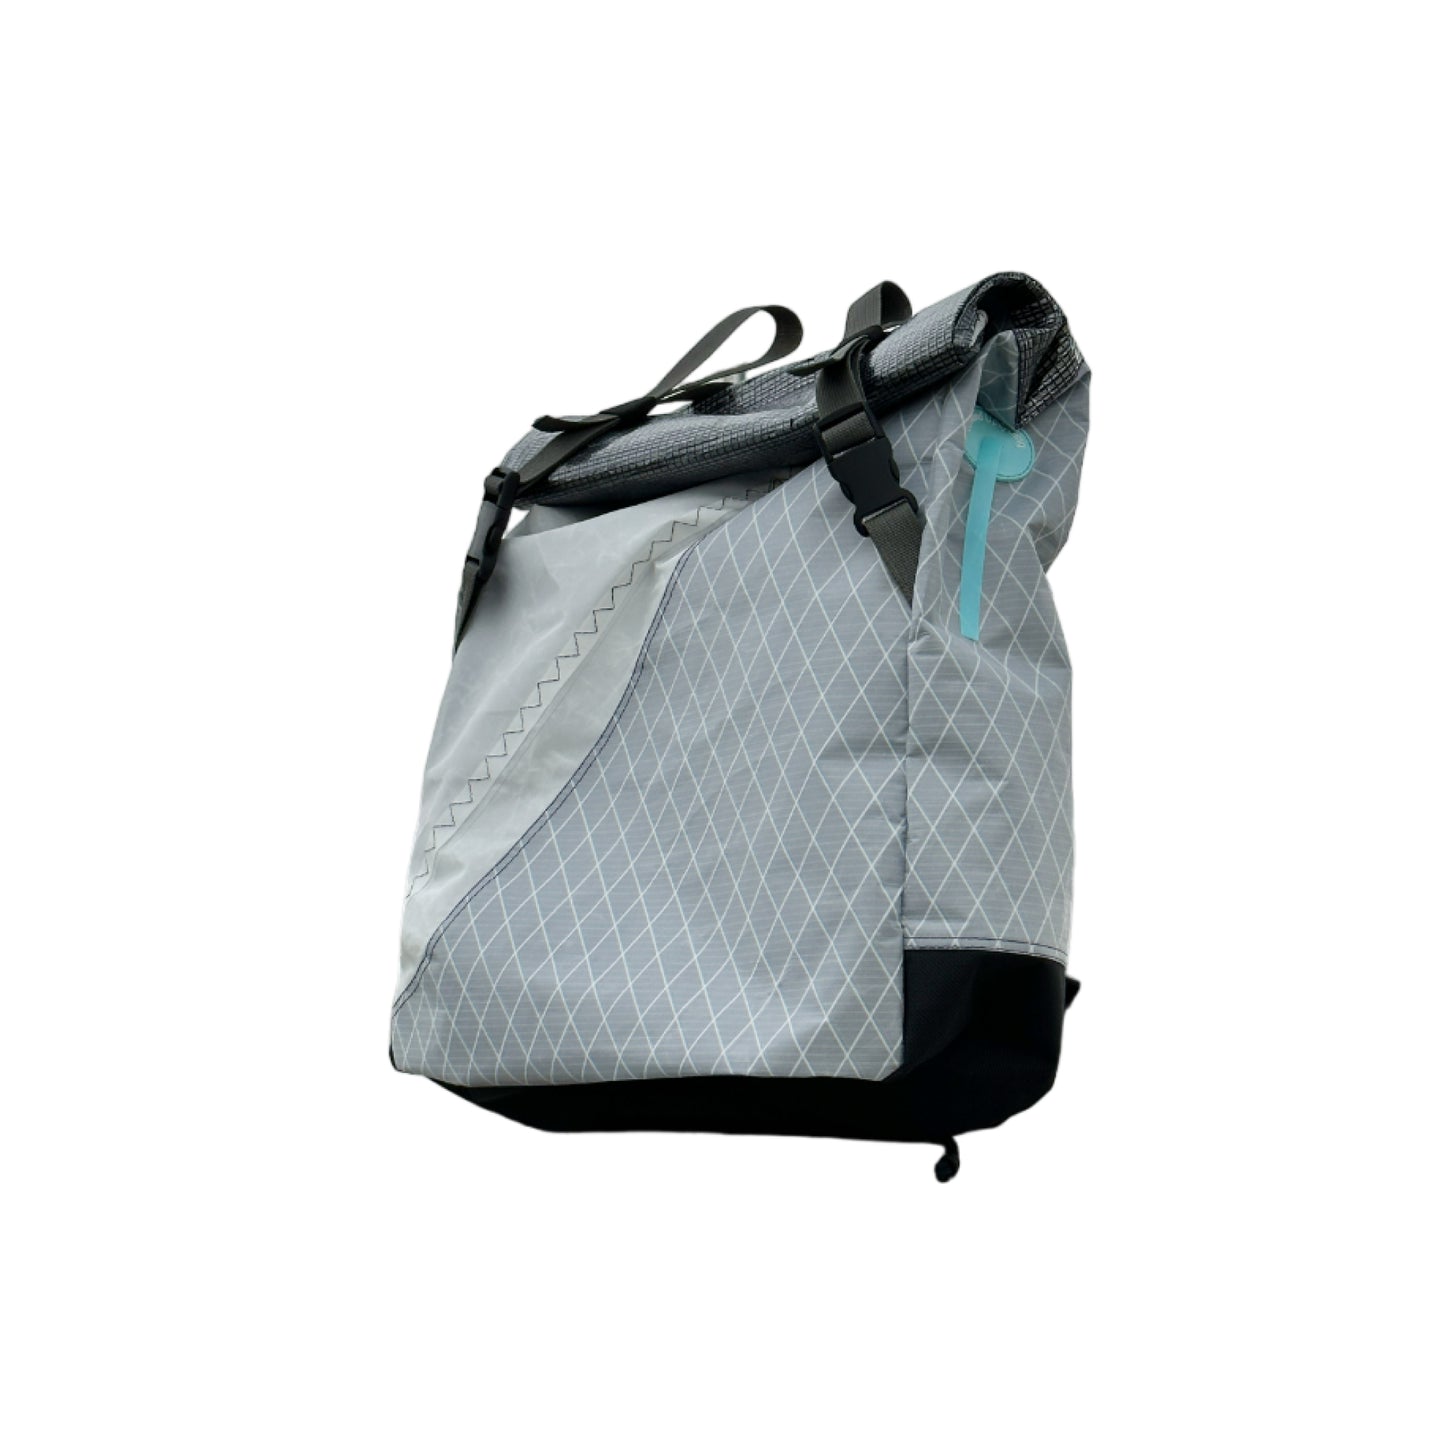 Everyday roll-top urban backpack. Designer daypack from REwind, Ukraine